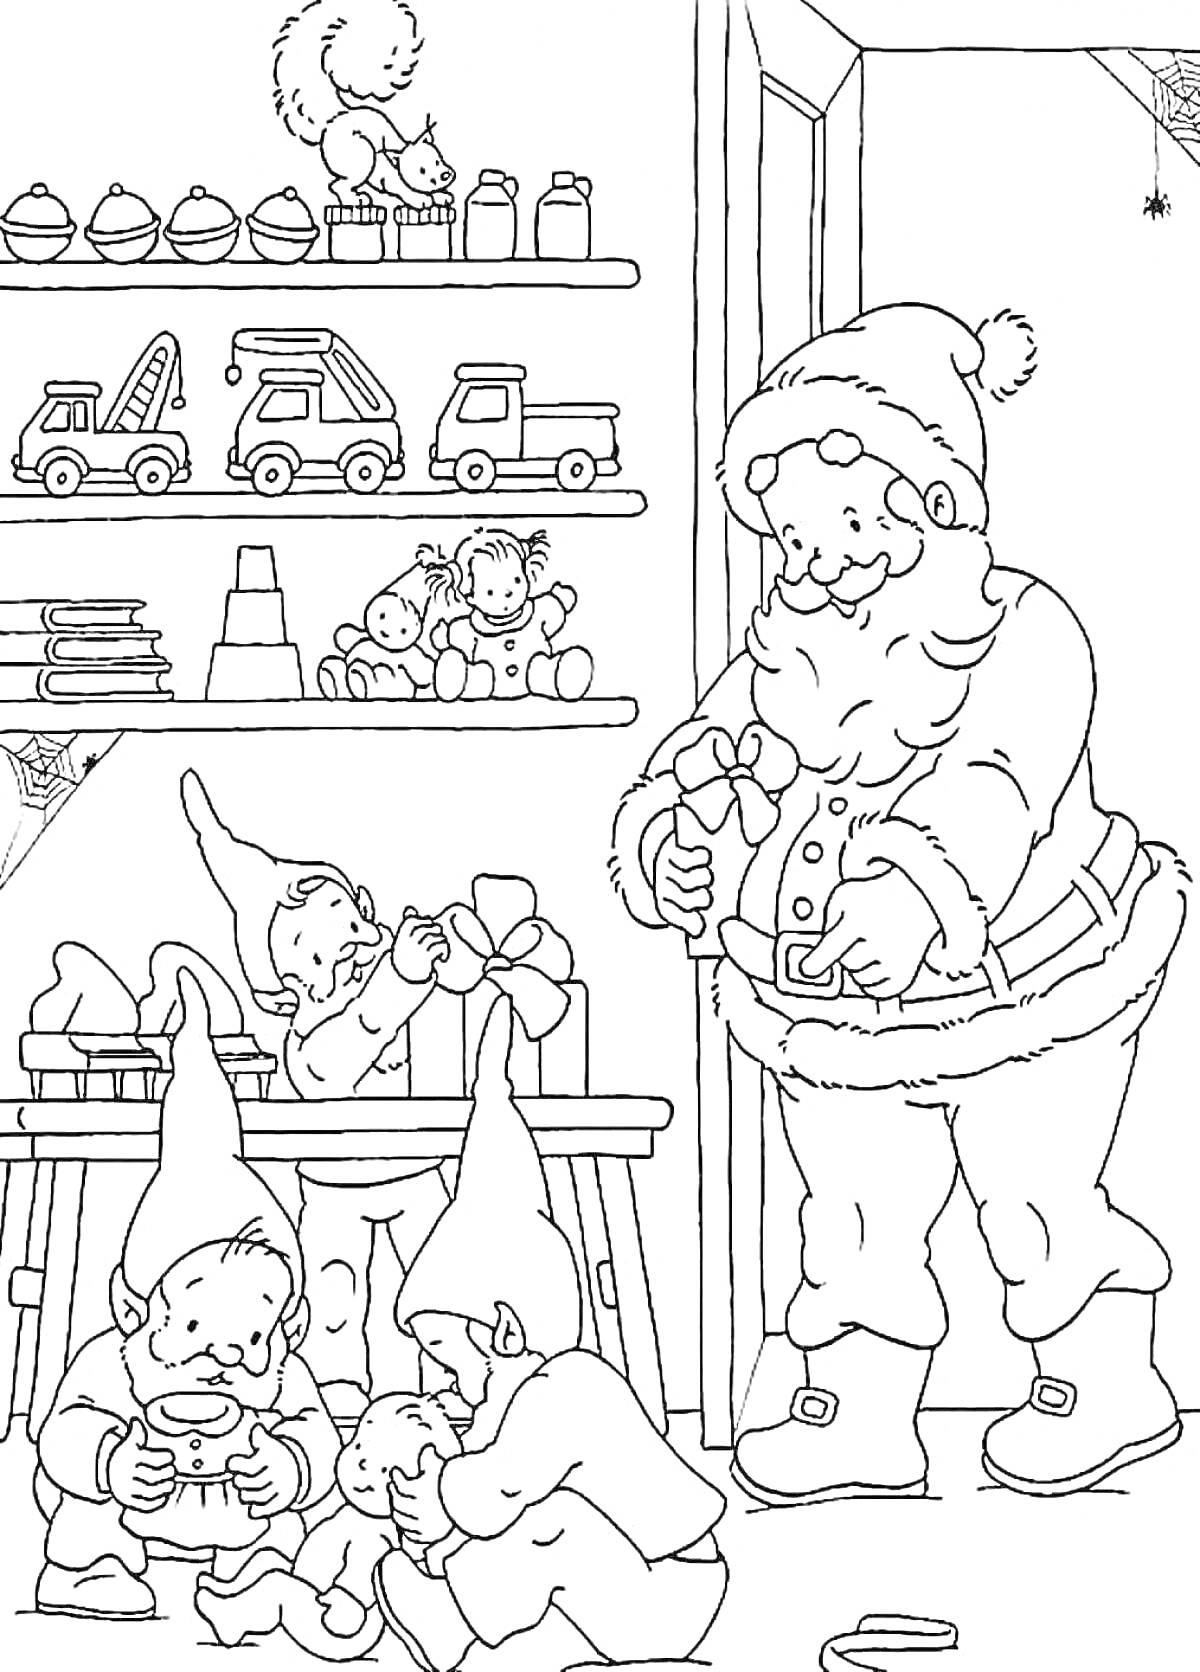 На раскраске изображено: Эльфы, Подарки, Полки, Белка, Паутина, Санта Клаус